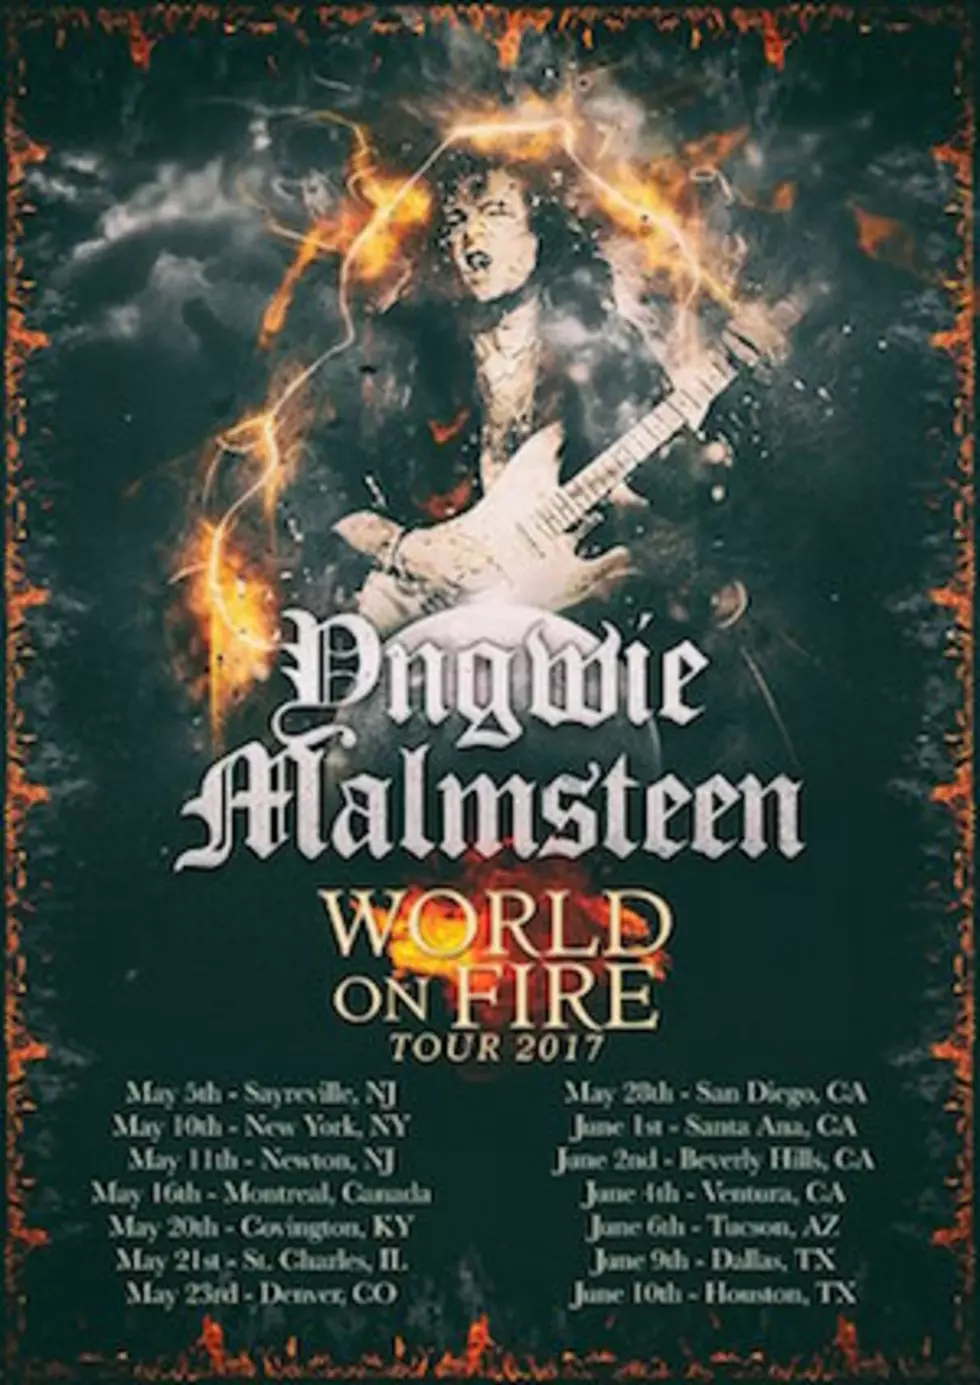 Yngwie Malmsteen Announces 'World on Fire' 2017 Tour